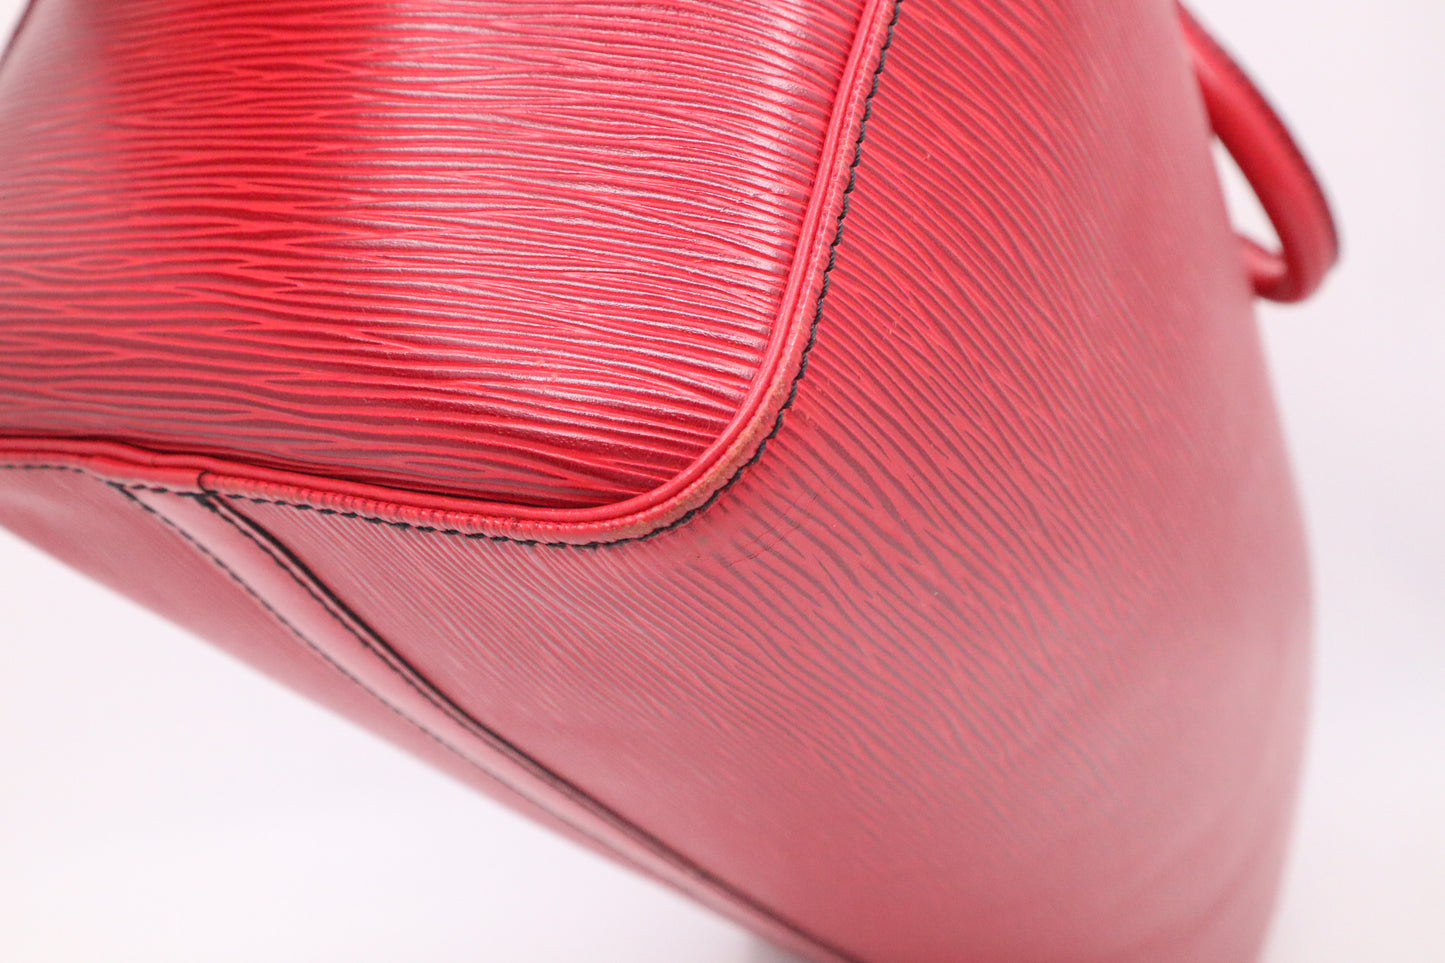 Louis Vuitton Speedy 40 in Red Epi Leather